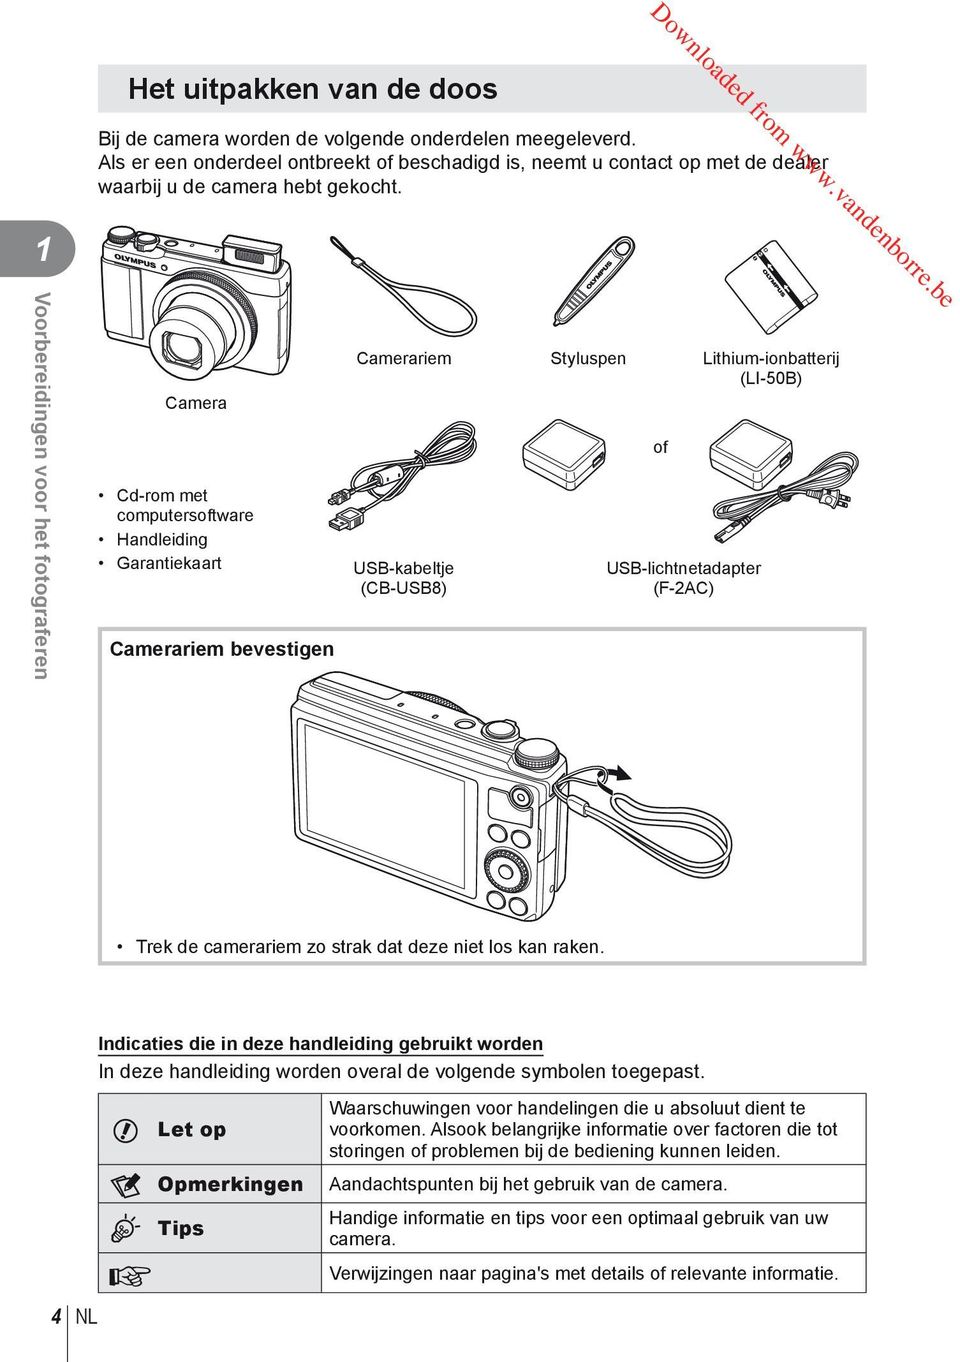 USB-lichtnetadapter (F-2AC) Trek de camerariem zo strak dat deze niet los kan raken.